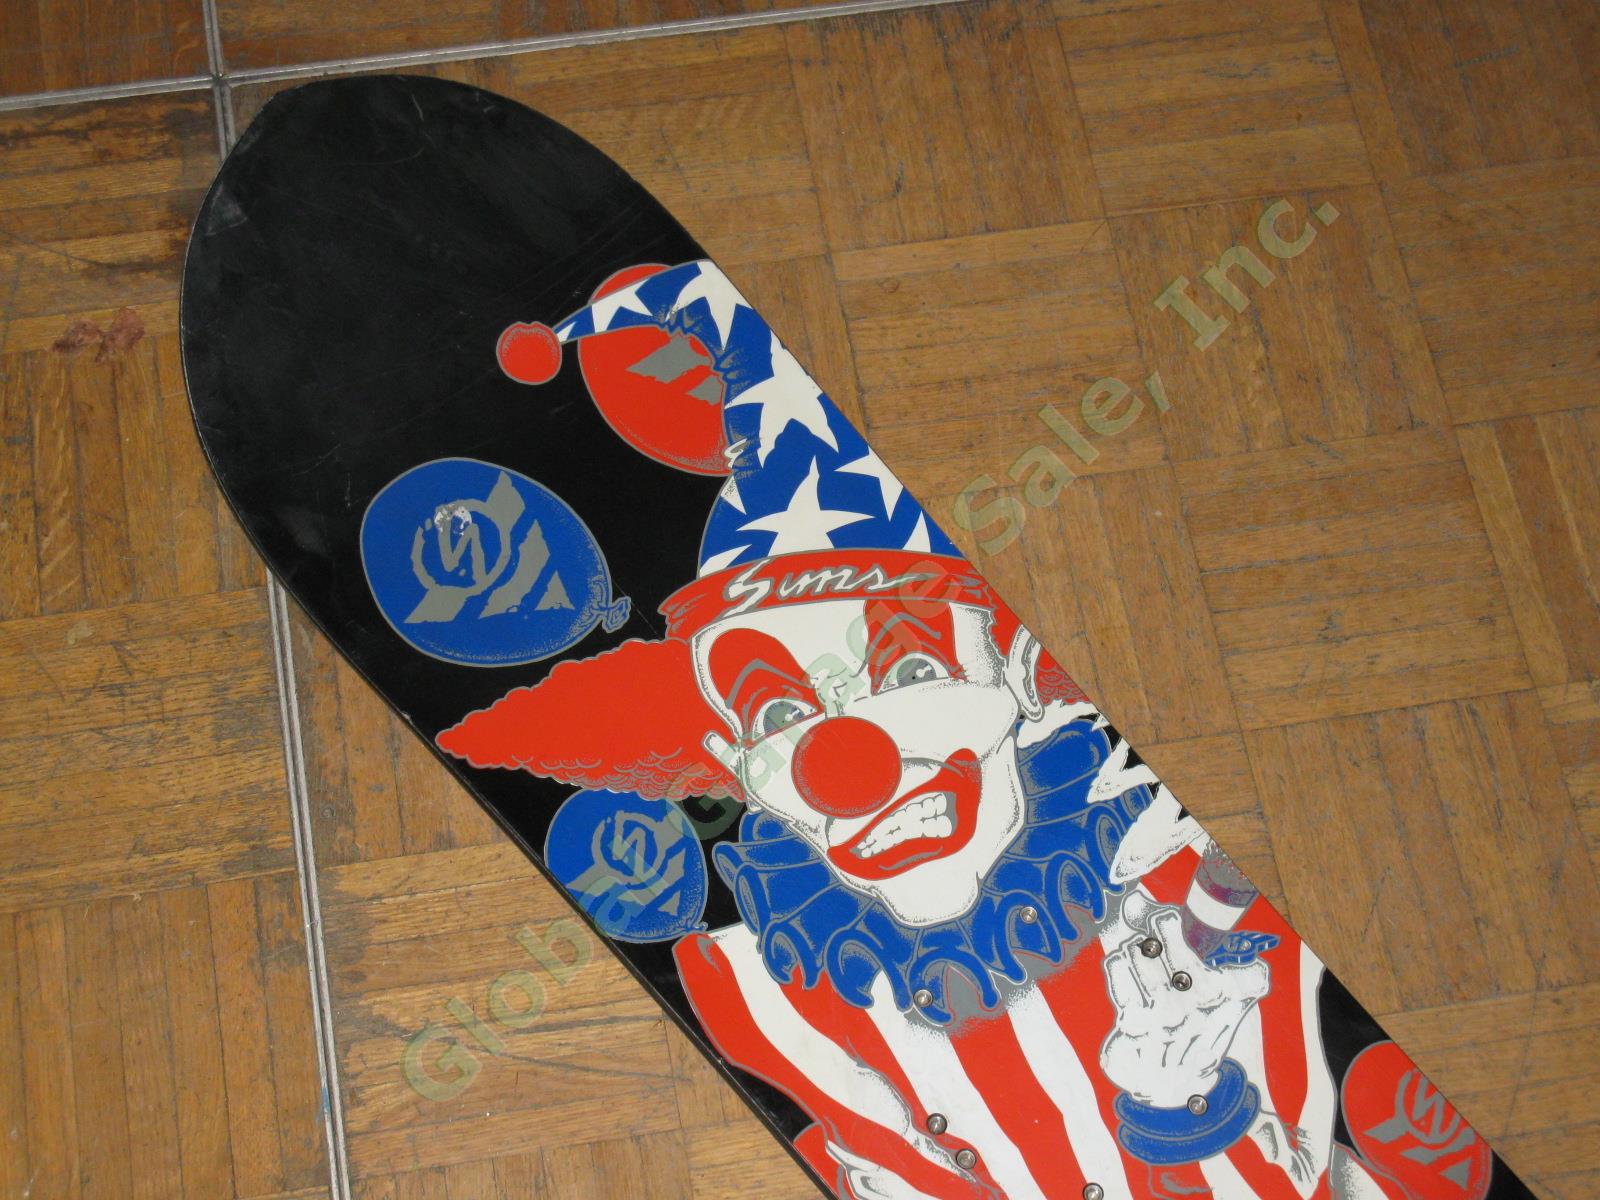 Vtg 1991 Sims Shaun Palmer Pro Model Clown Snowboard 157cm #209489 w/Bindings NR 1